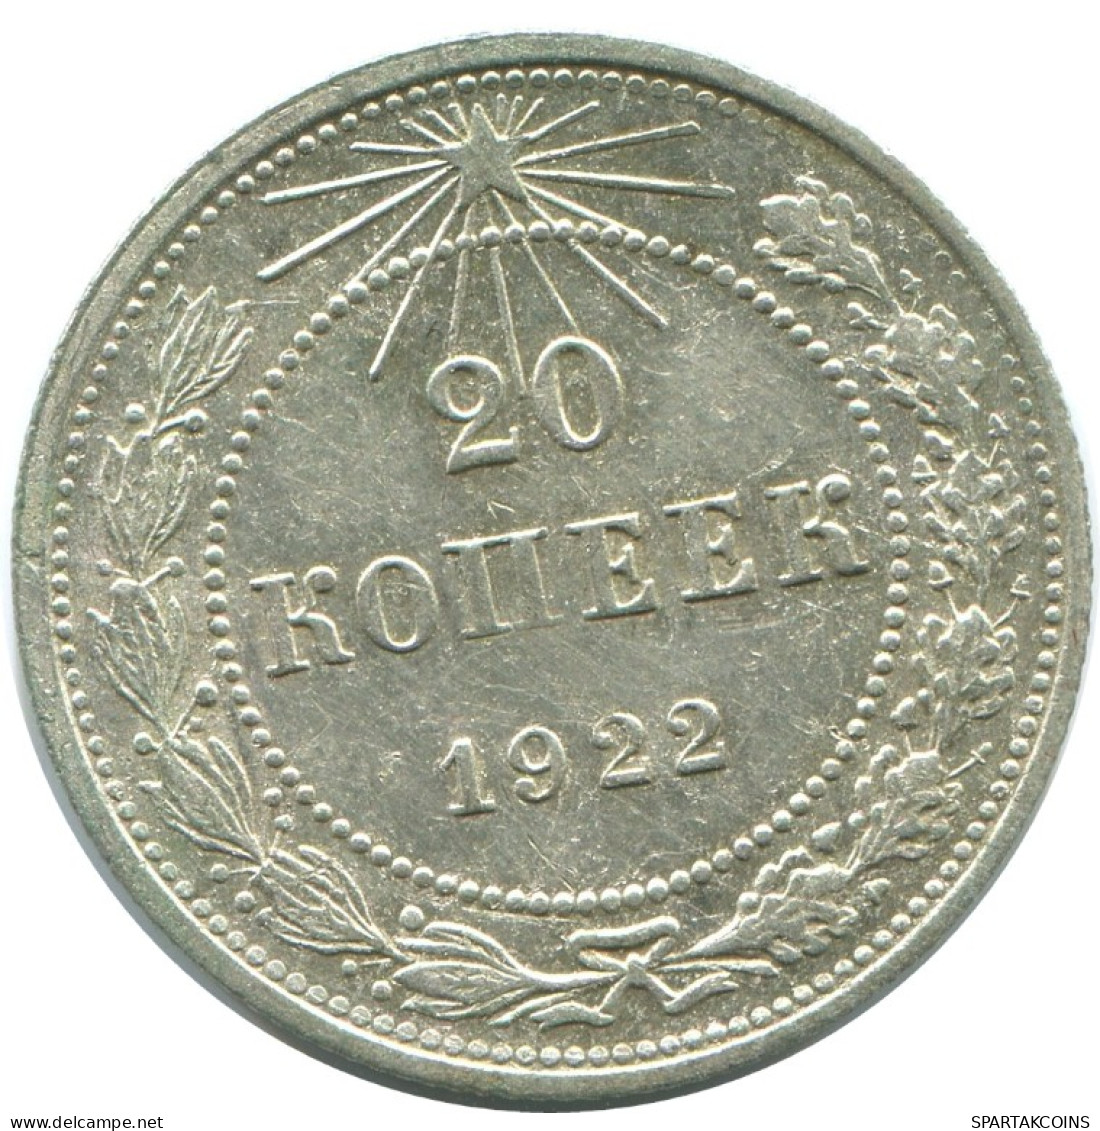 20 KOPEKS 1923 RUSSIA RSFSR SILVER Coin HIGH GRADE #AF385.4.U.A - Russie